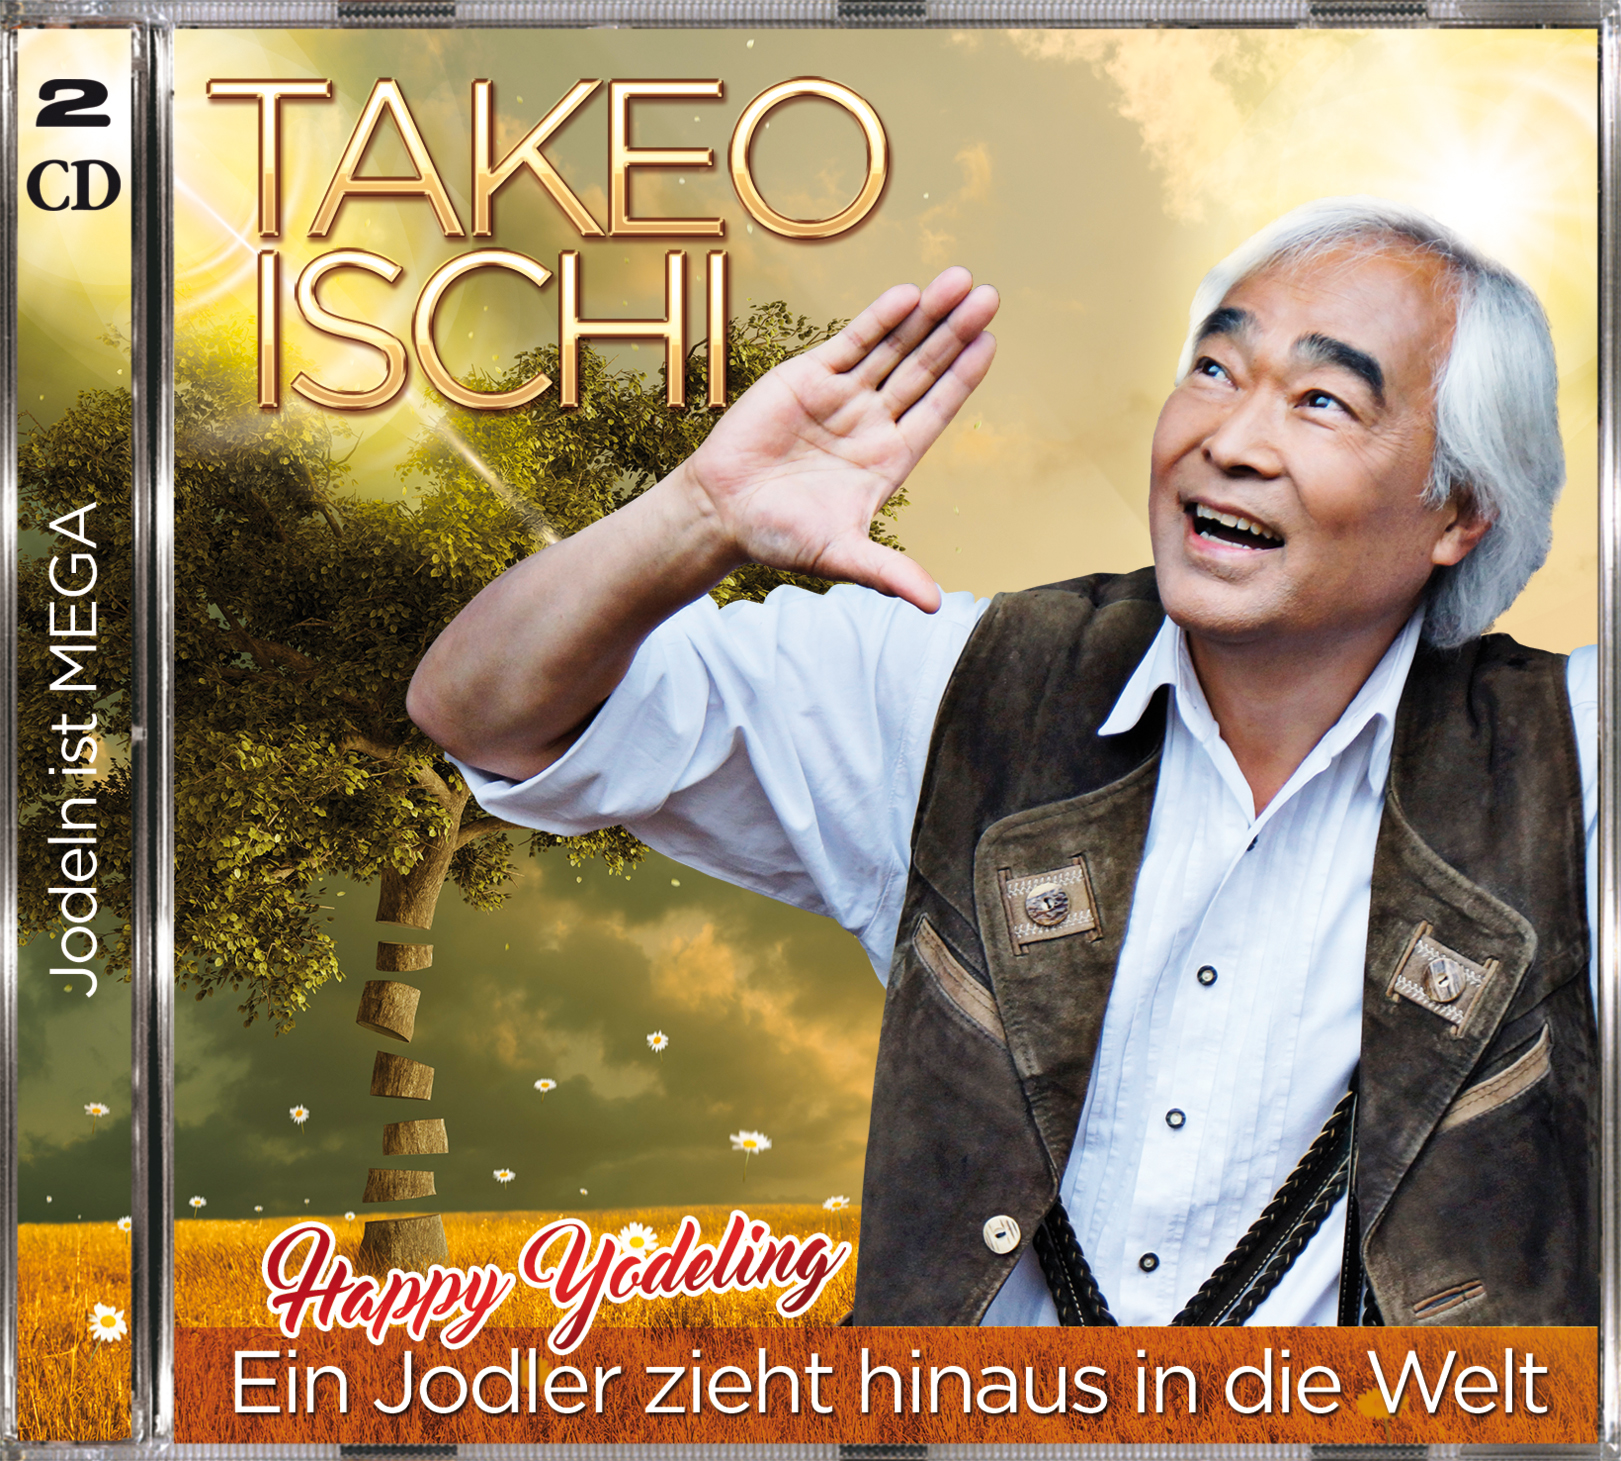 Takeo Ischi - Happy Yodel - Ein Jodler zieht hinaus in die Welt (Doppel-Album)